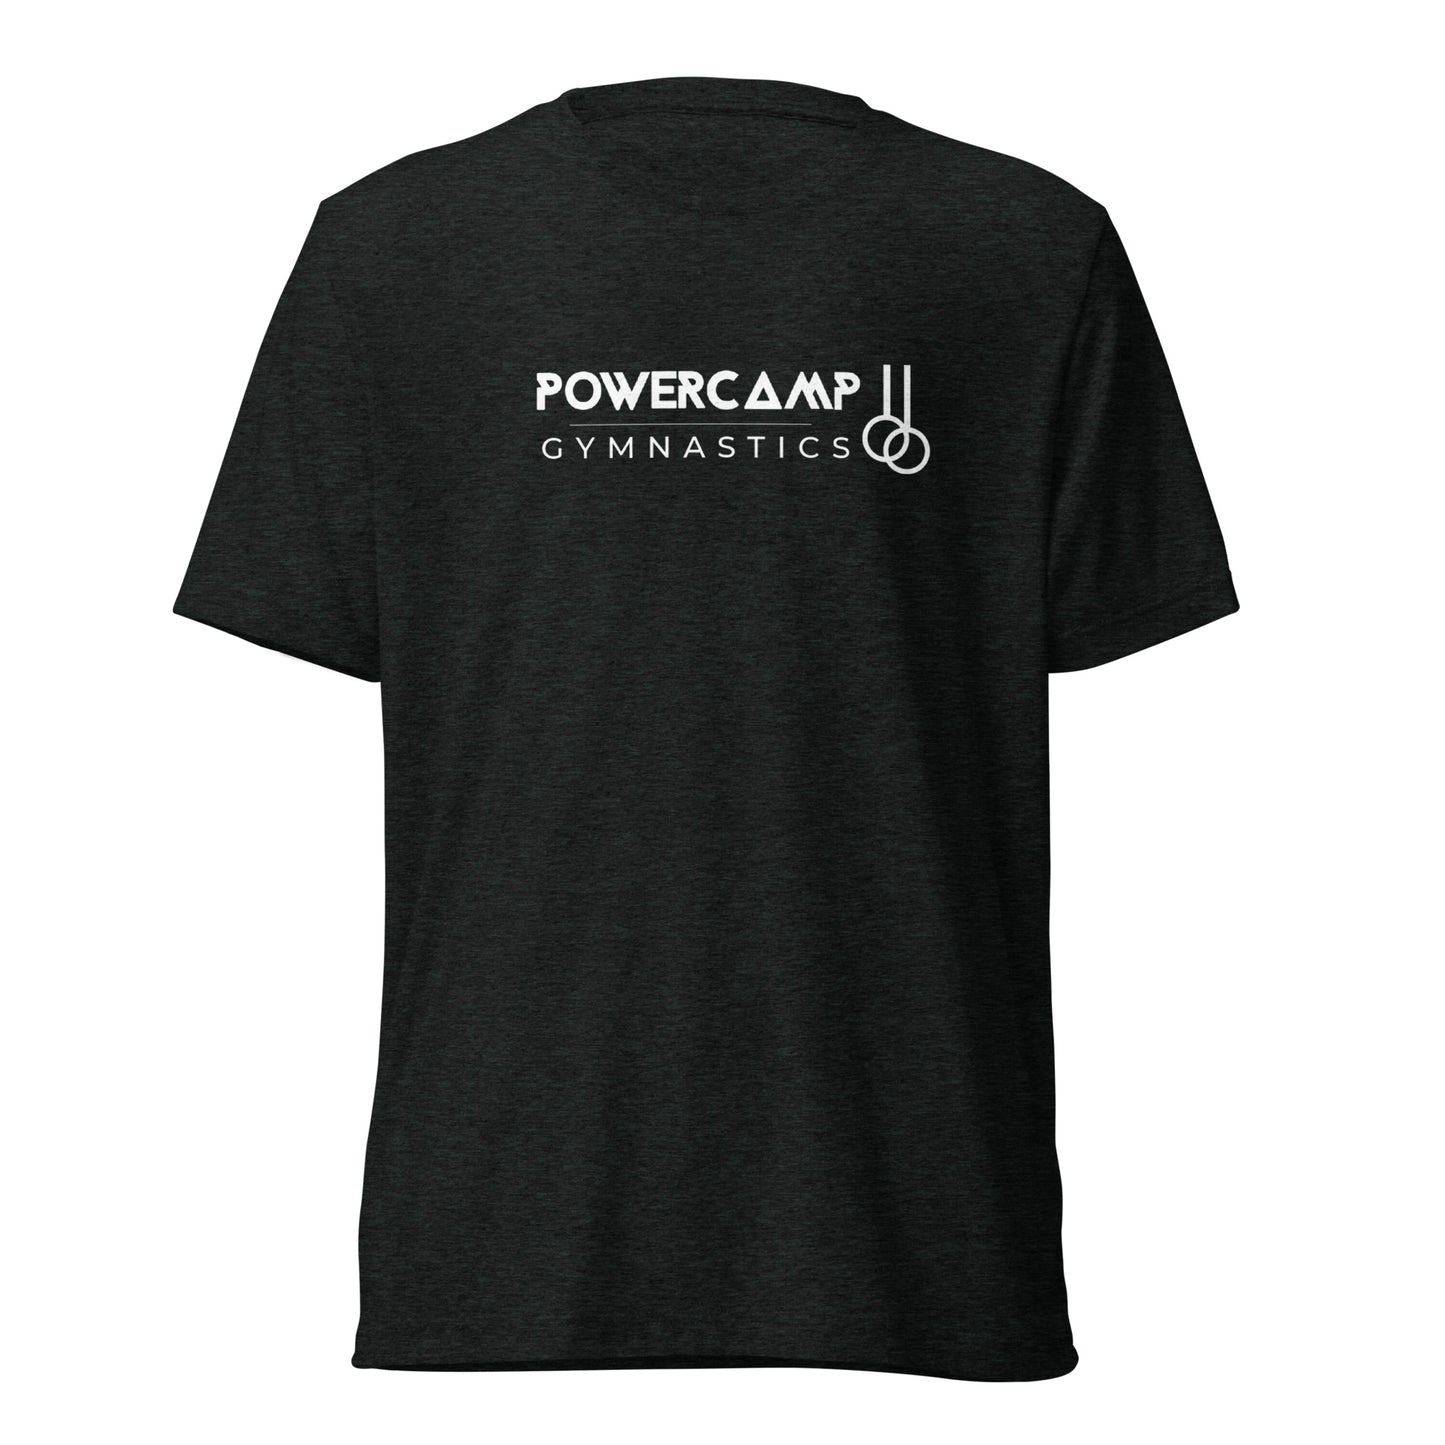 T-shirt Powercamp gymnastics